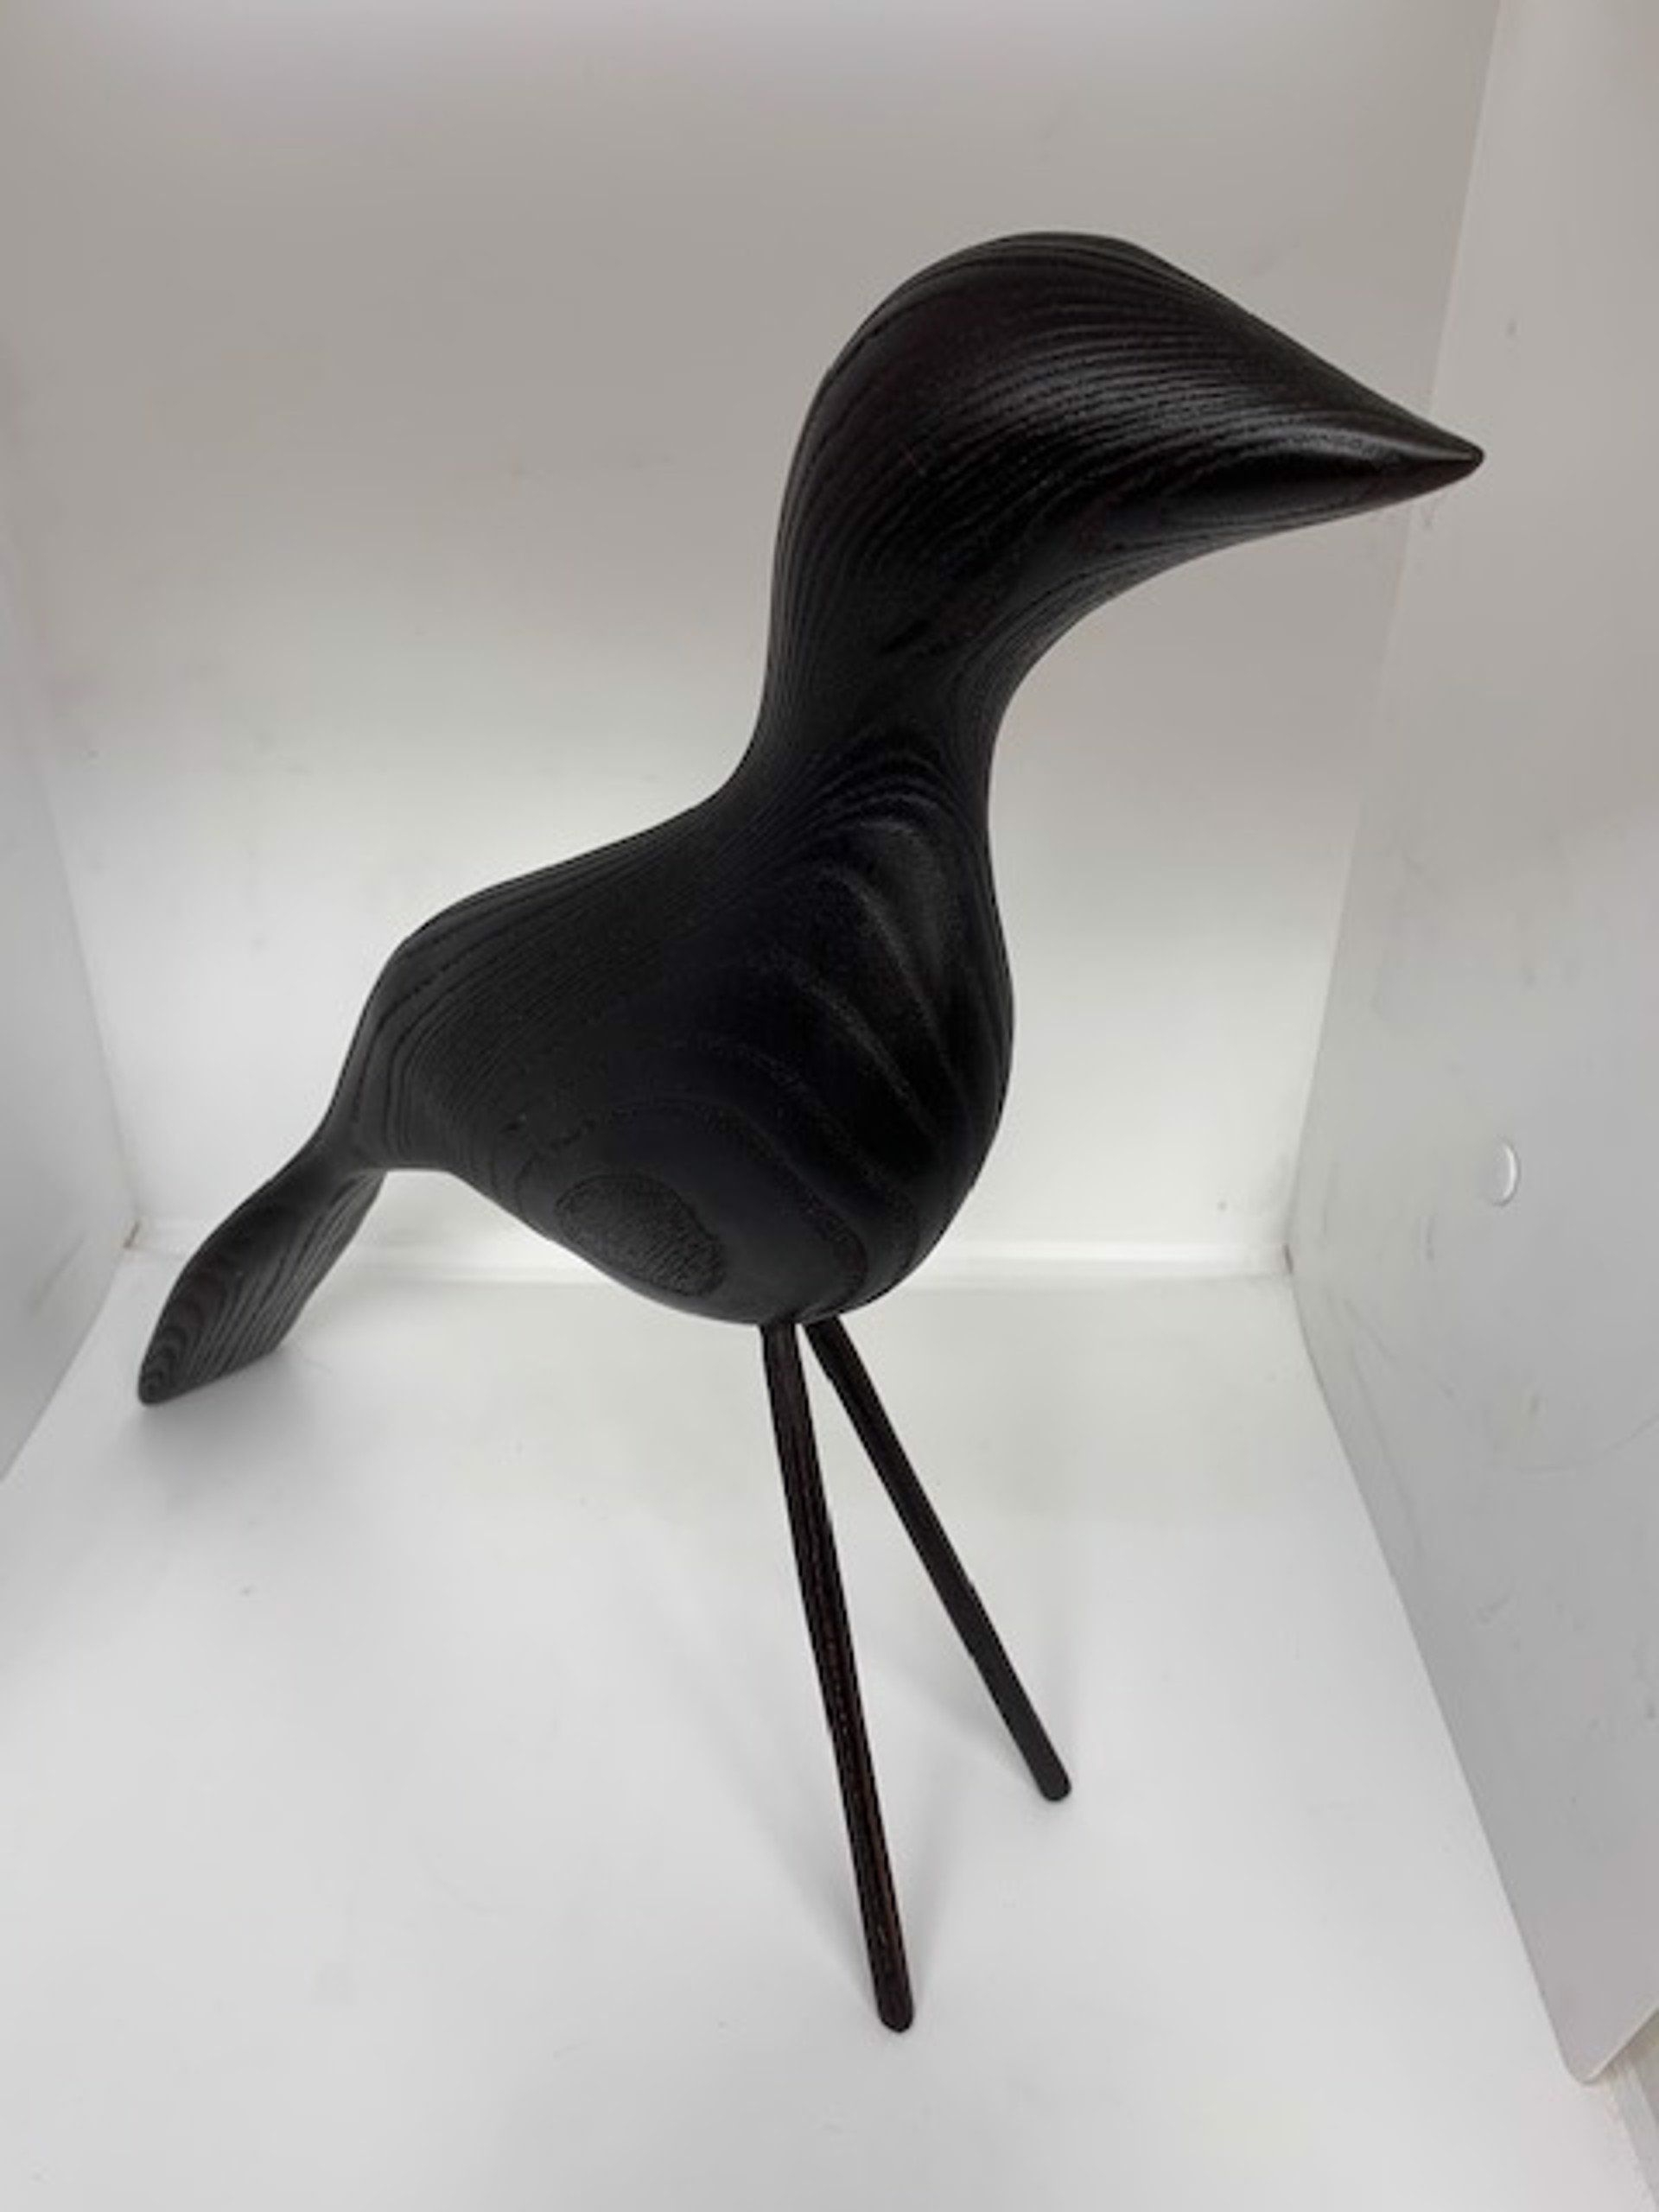 Standing Bird D by Barry Harrison